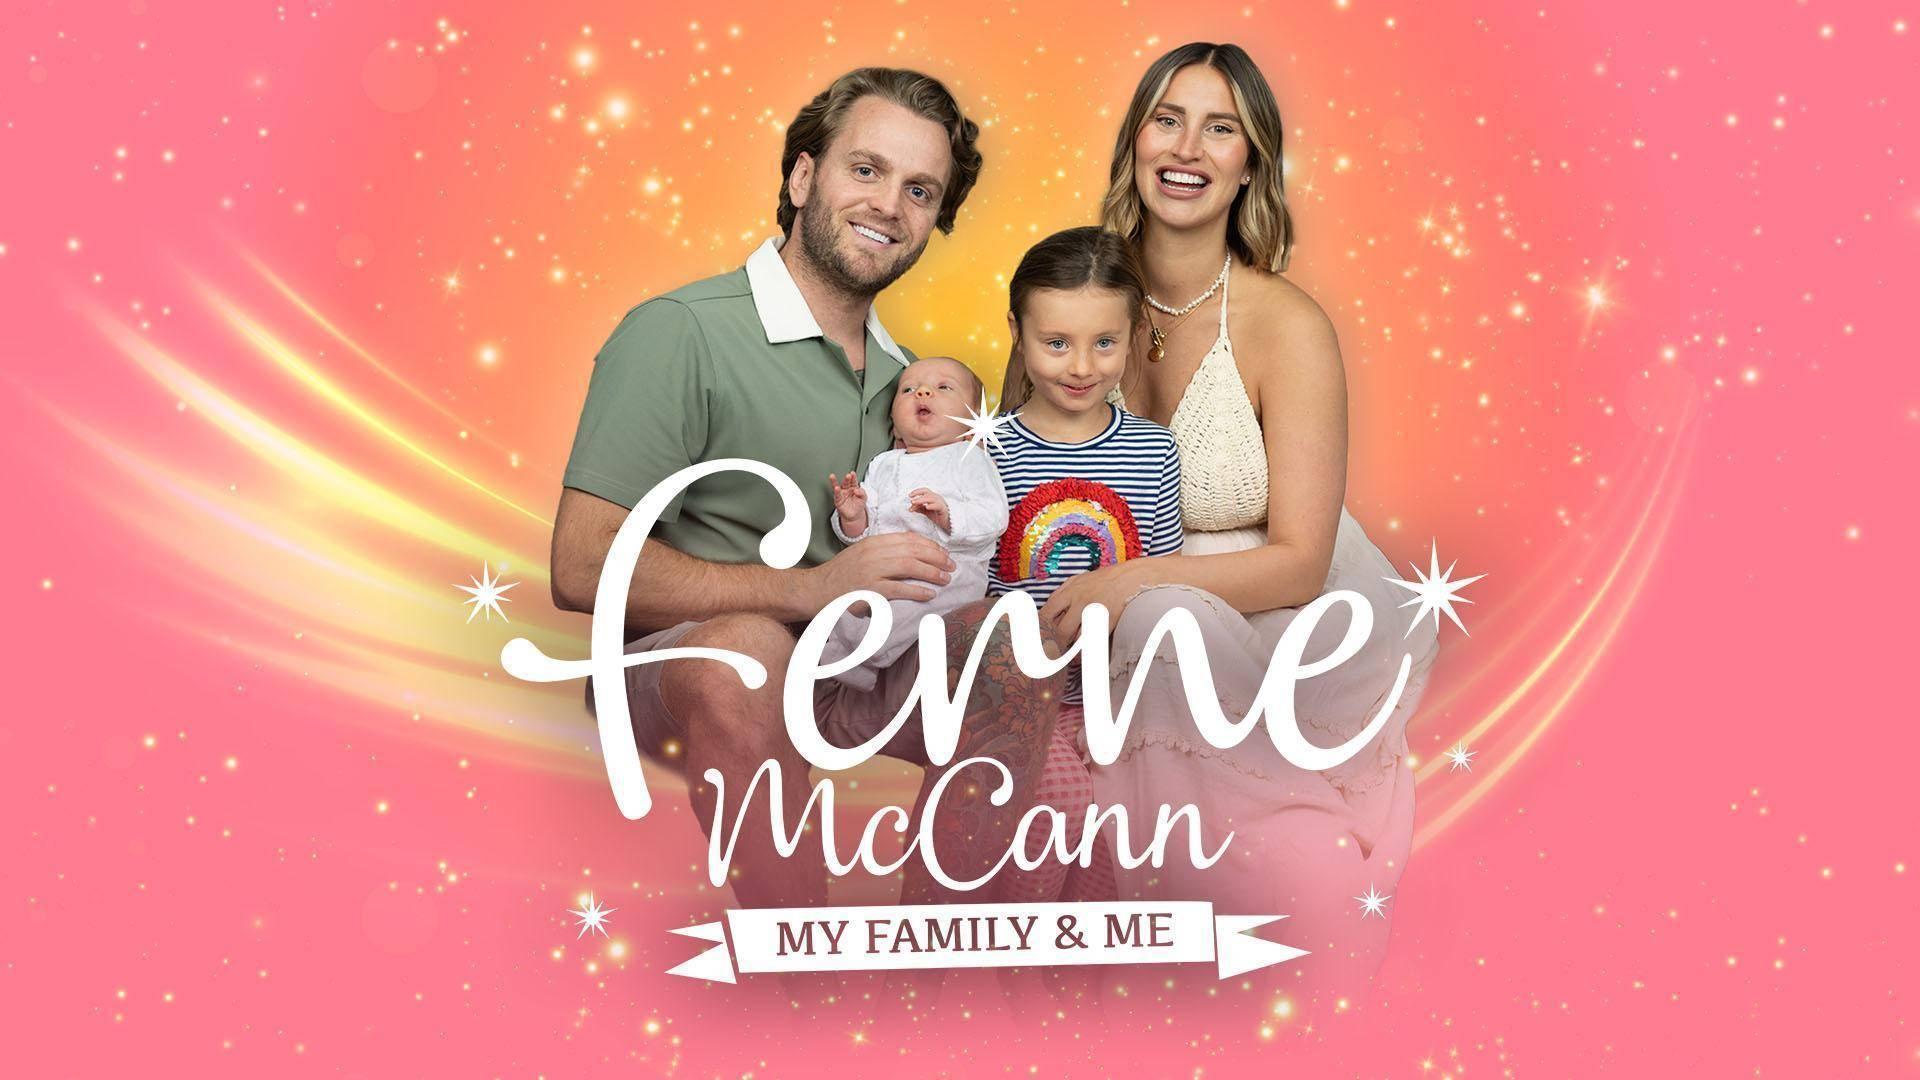 Ferne McCann: My Family & Me